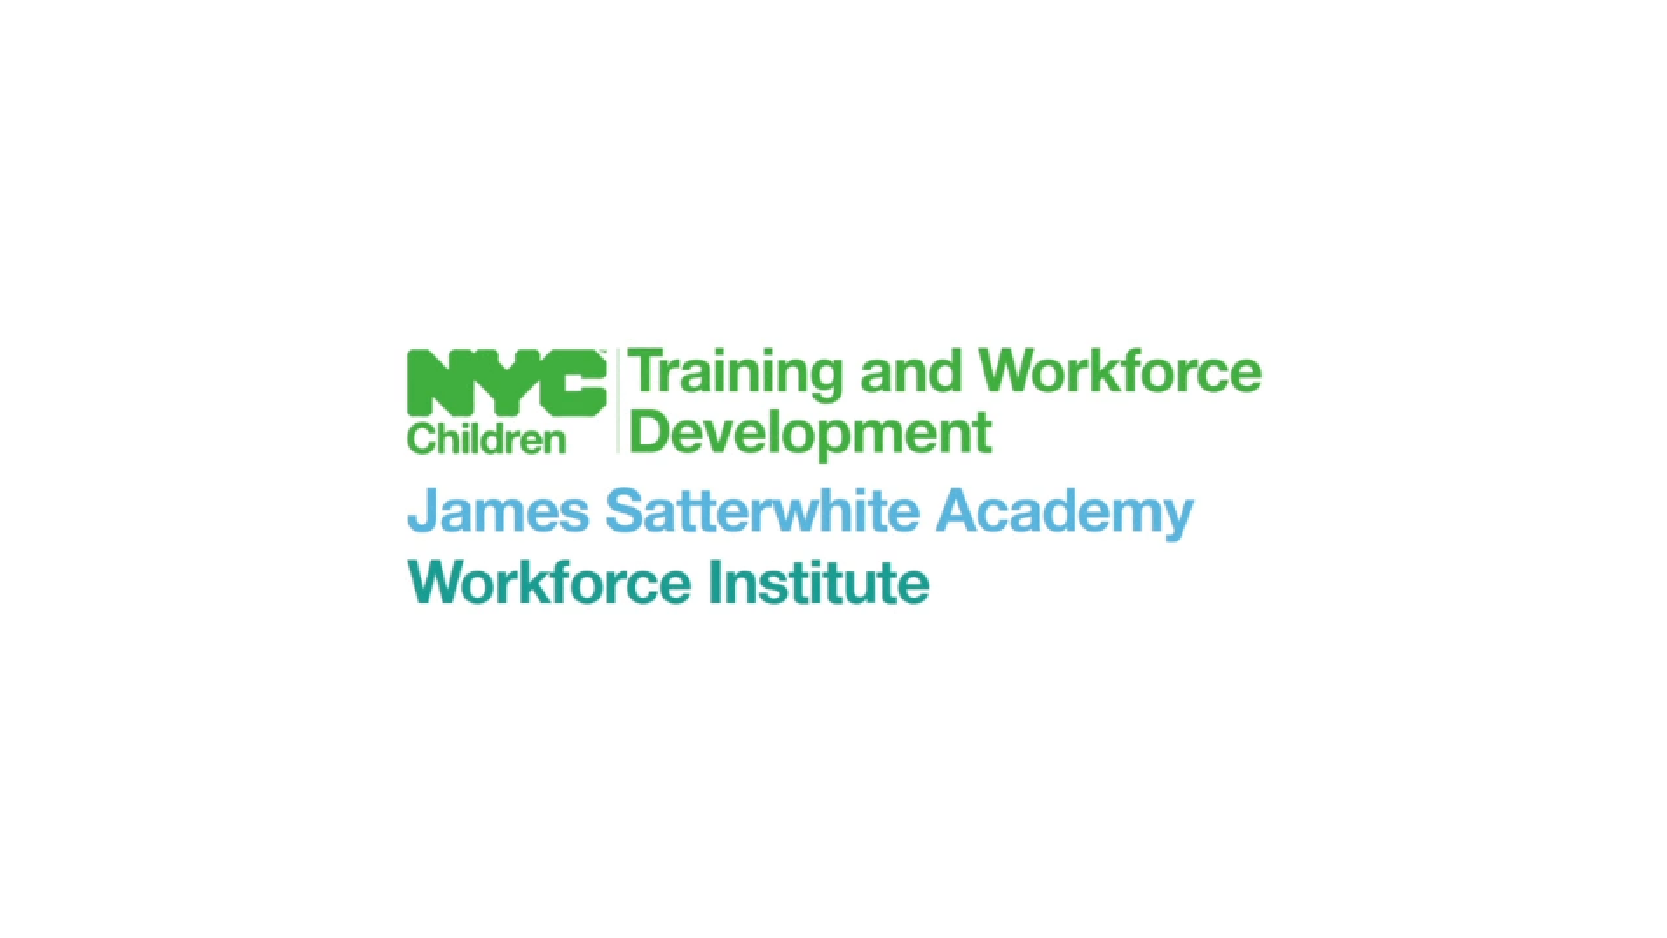 Tour Of ACS Training Centers Video Splash Image Containing JSA WI Logo